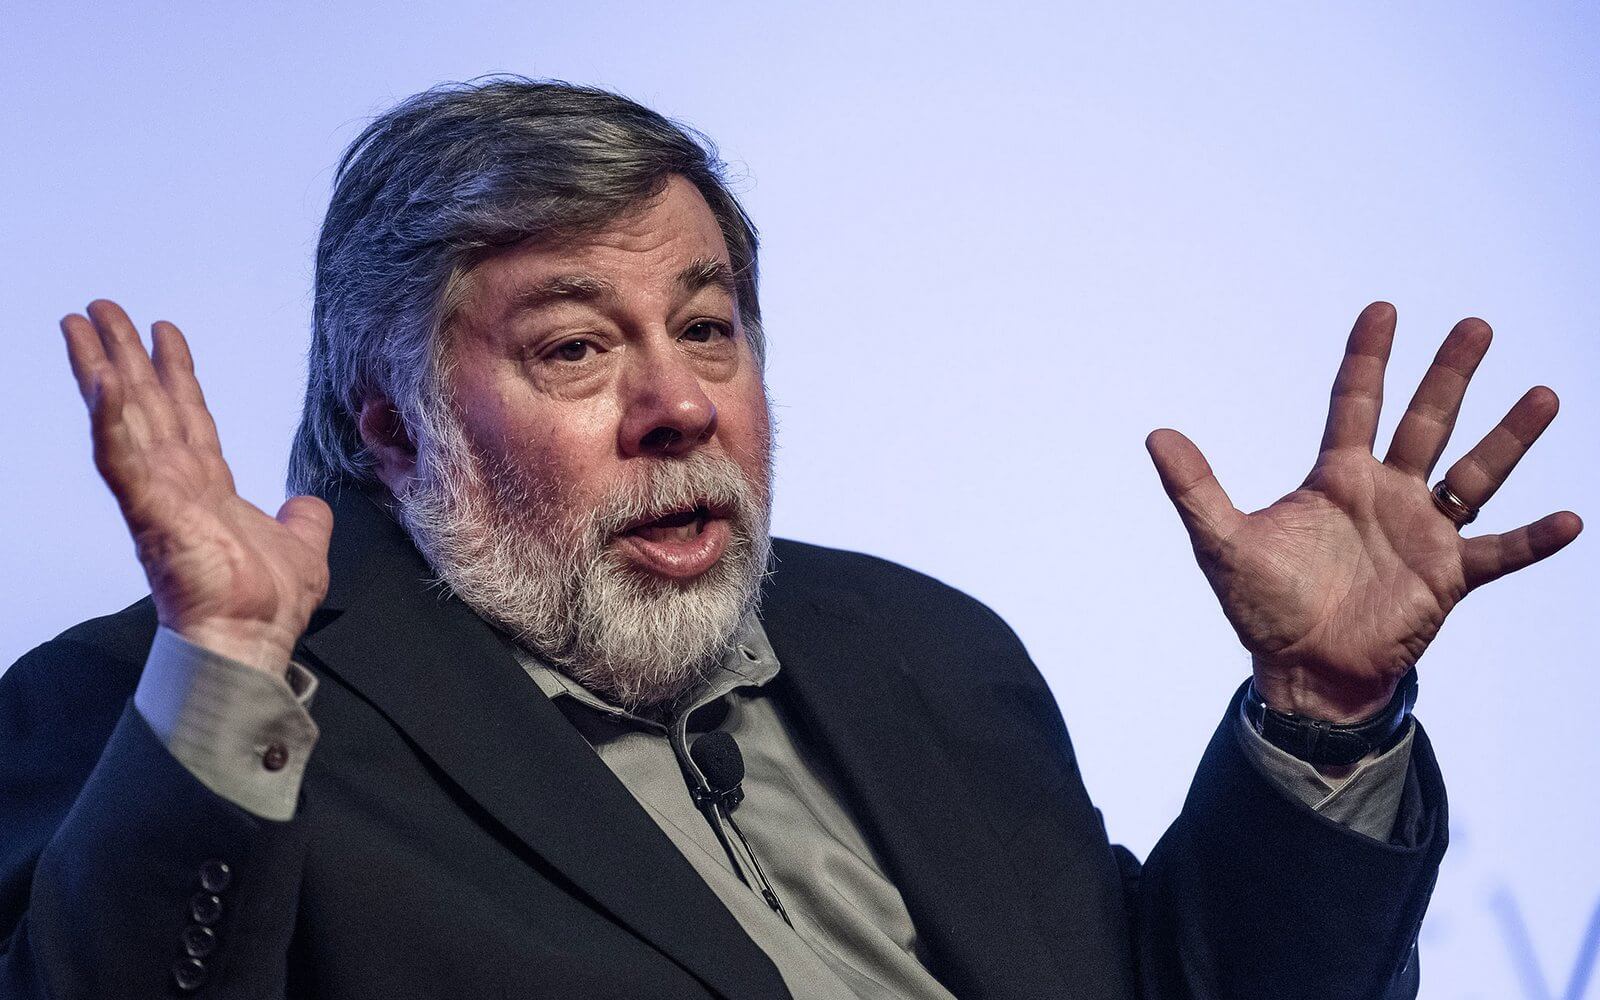 "Realmente no veo la diferencia": Steve Wozniak critica el nuevo iPhone 13